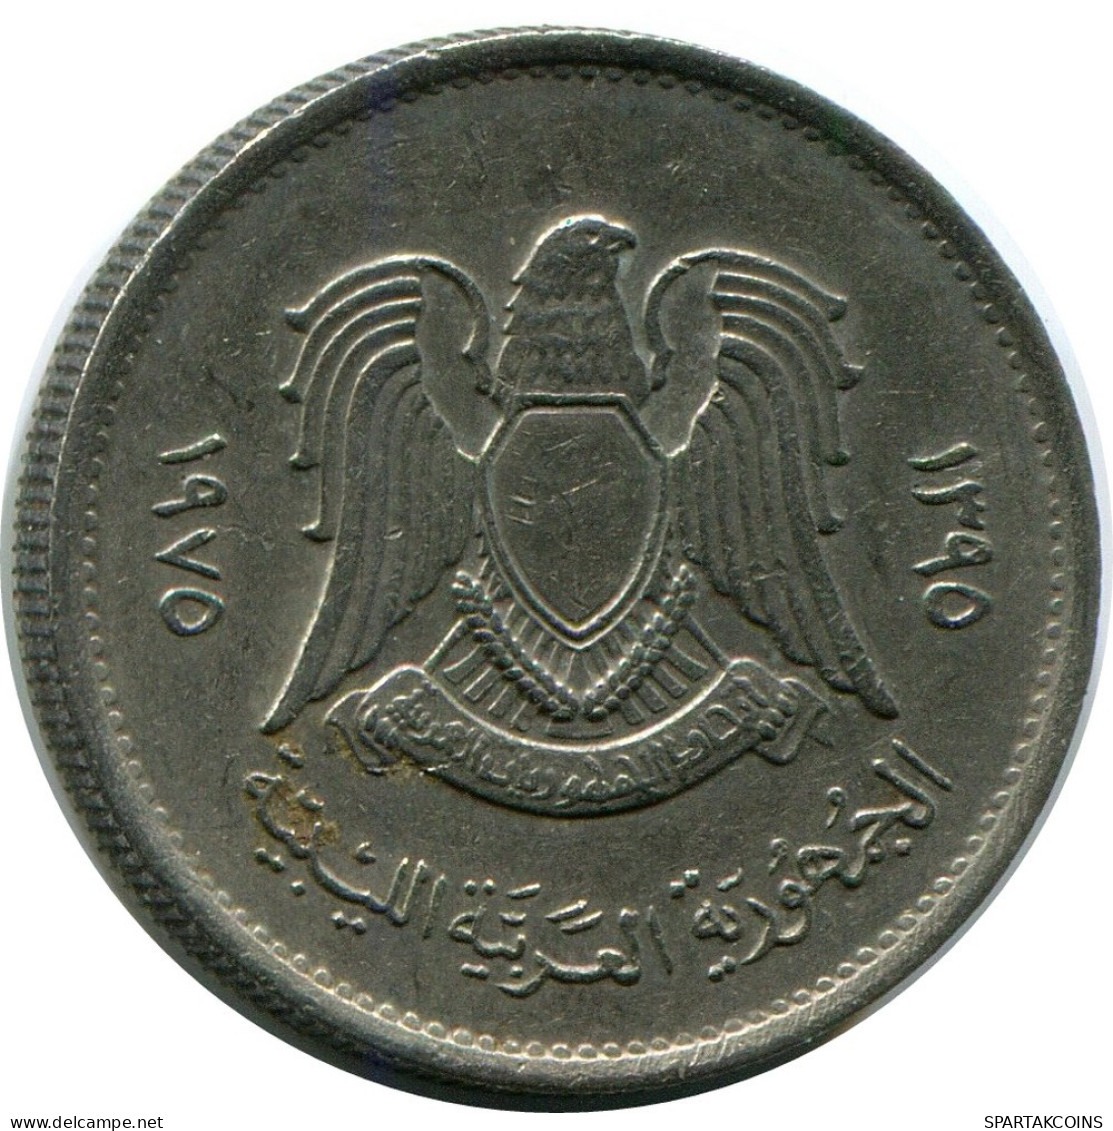 10 DIRHAMS 1975 LIBIA LIBYA Islámico Moneda #AP529.E.A - Libye